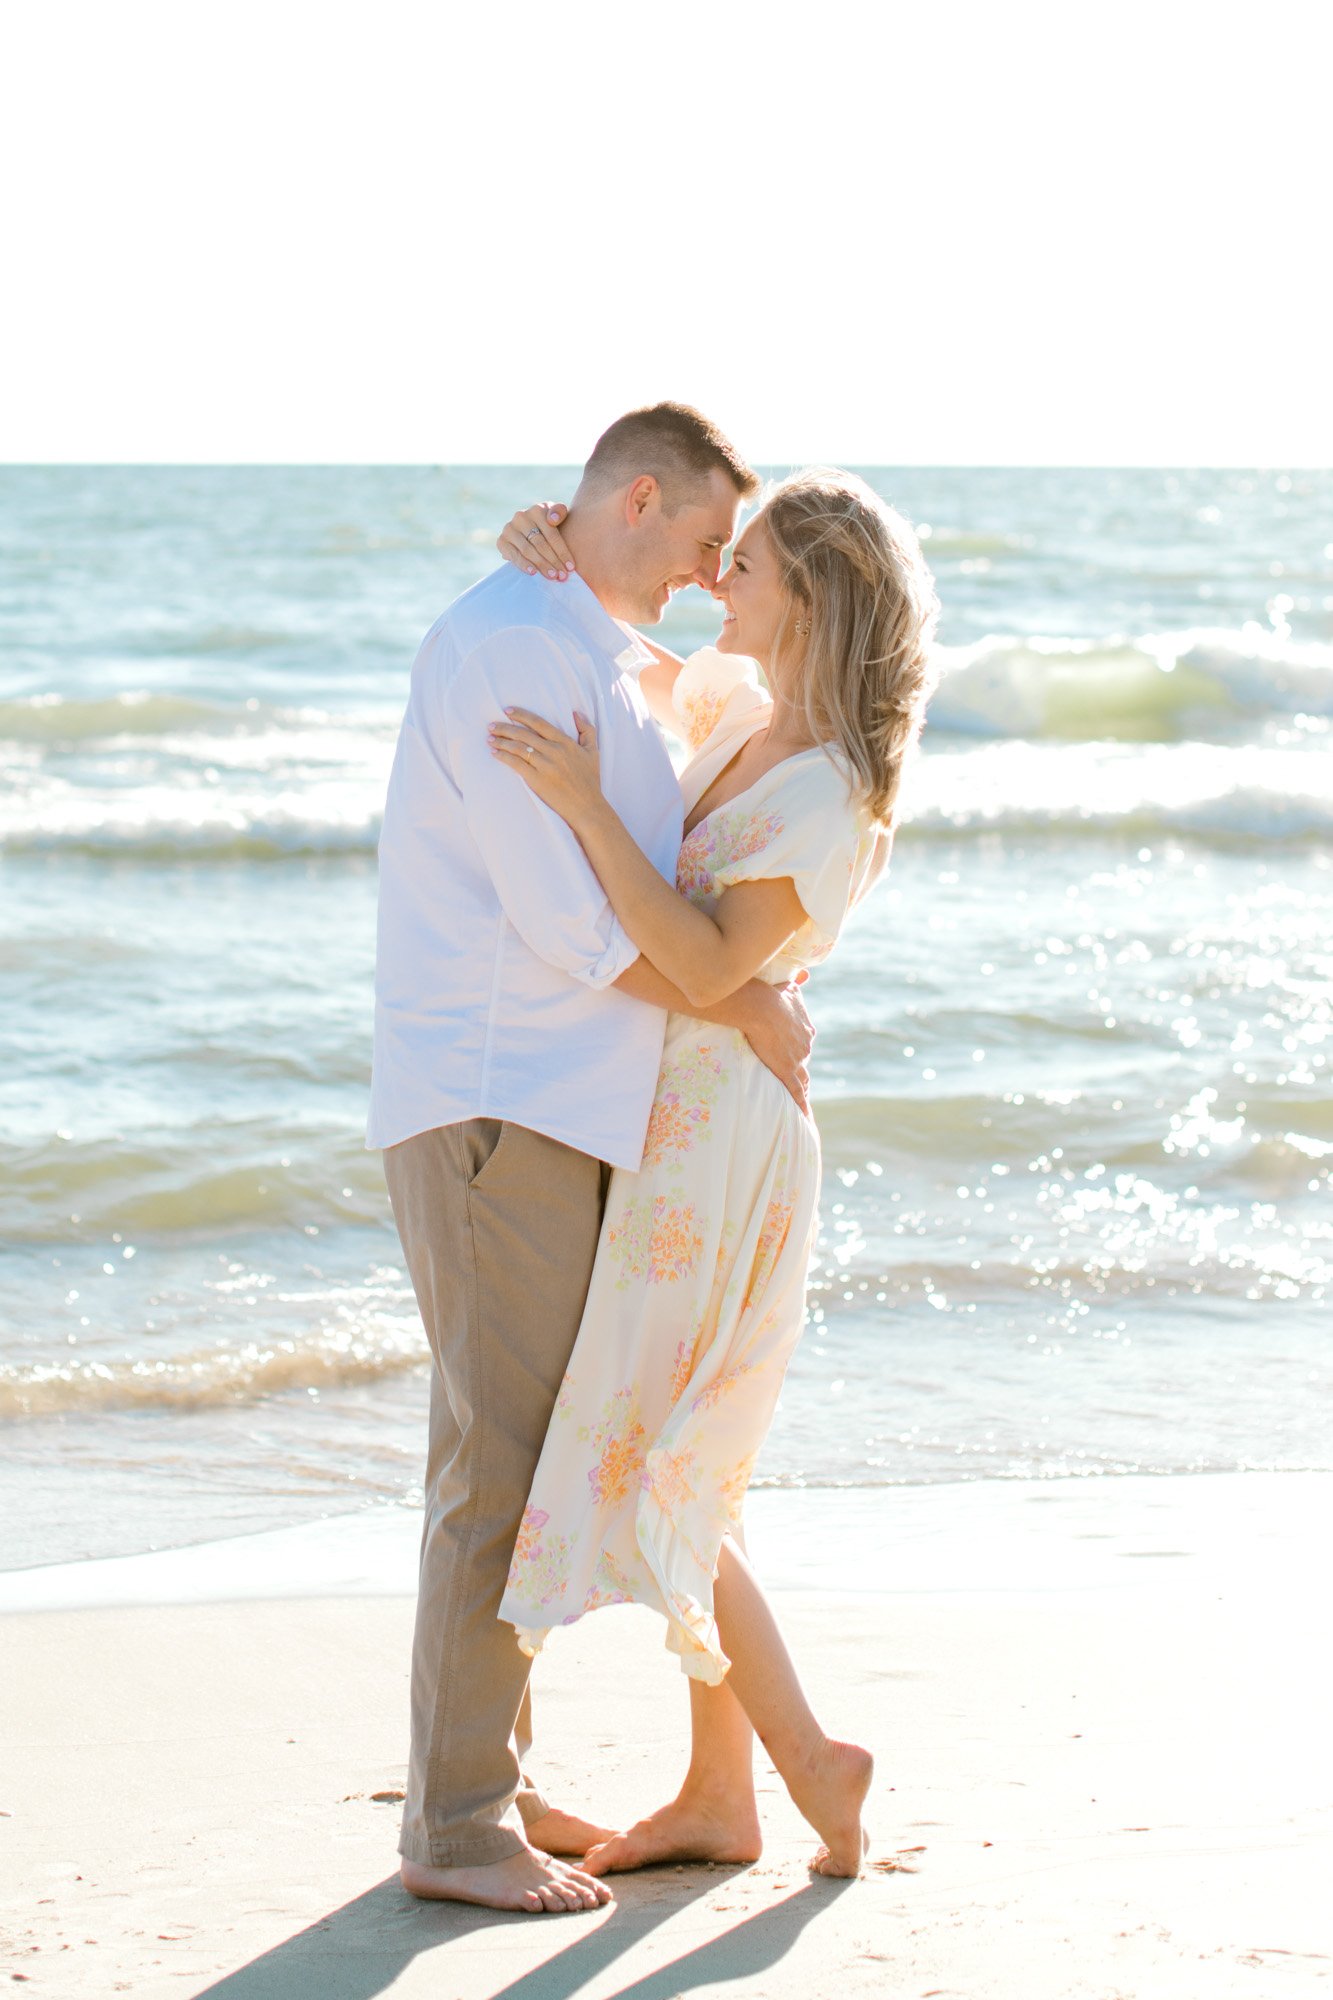 Modern Romantic Engagement Session on Lake Michigan | Laurenda Marie Photography